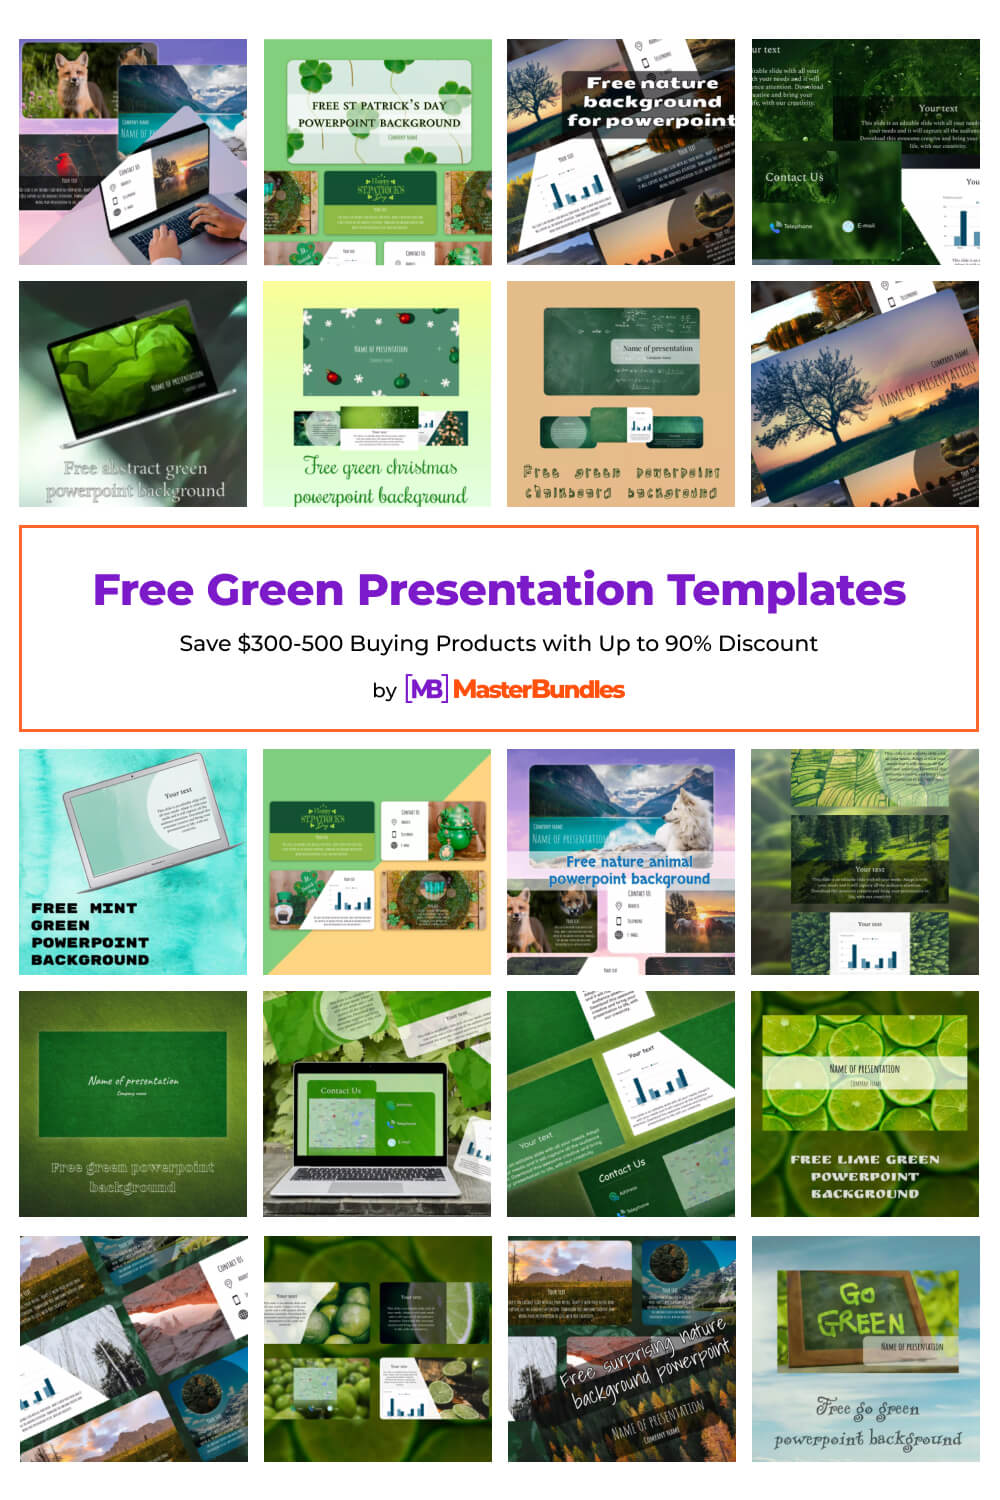 free green presentation templates pinterest image.